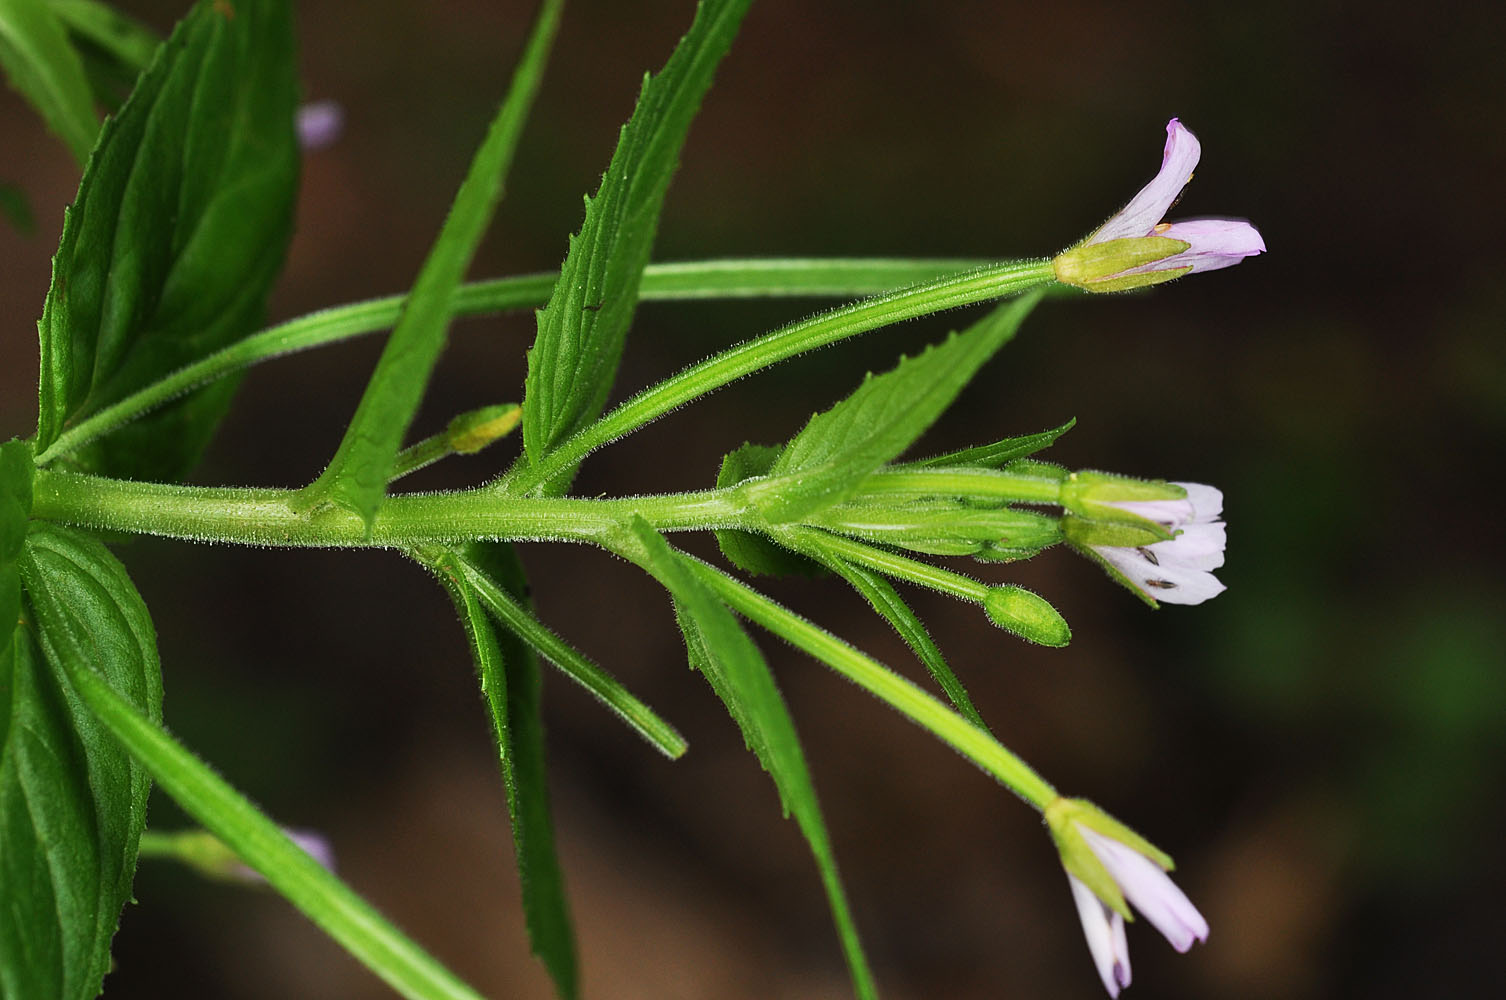 Flora of Eastern Washington Image: Epilobium ciliatum